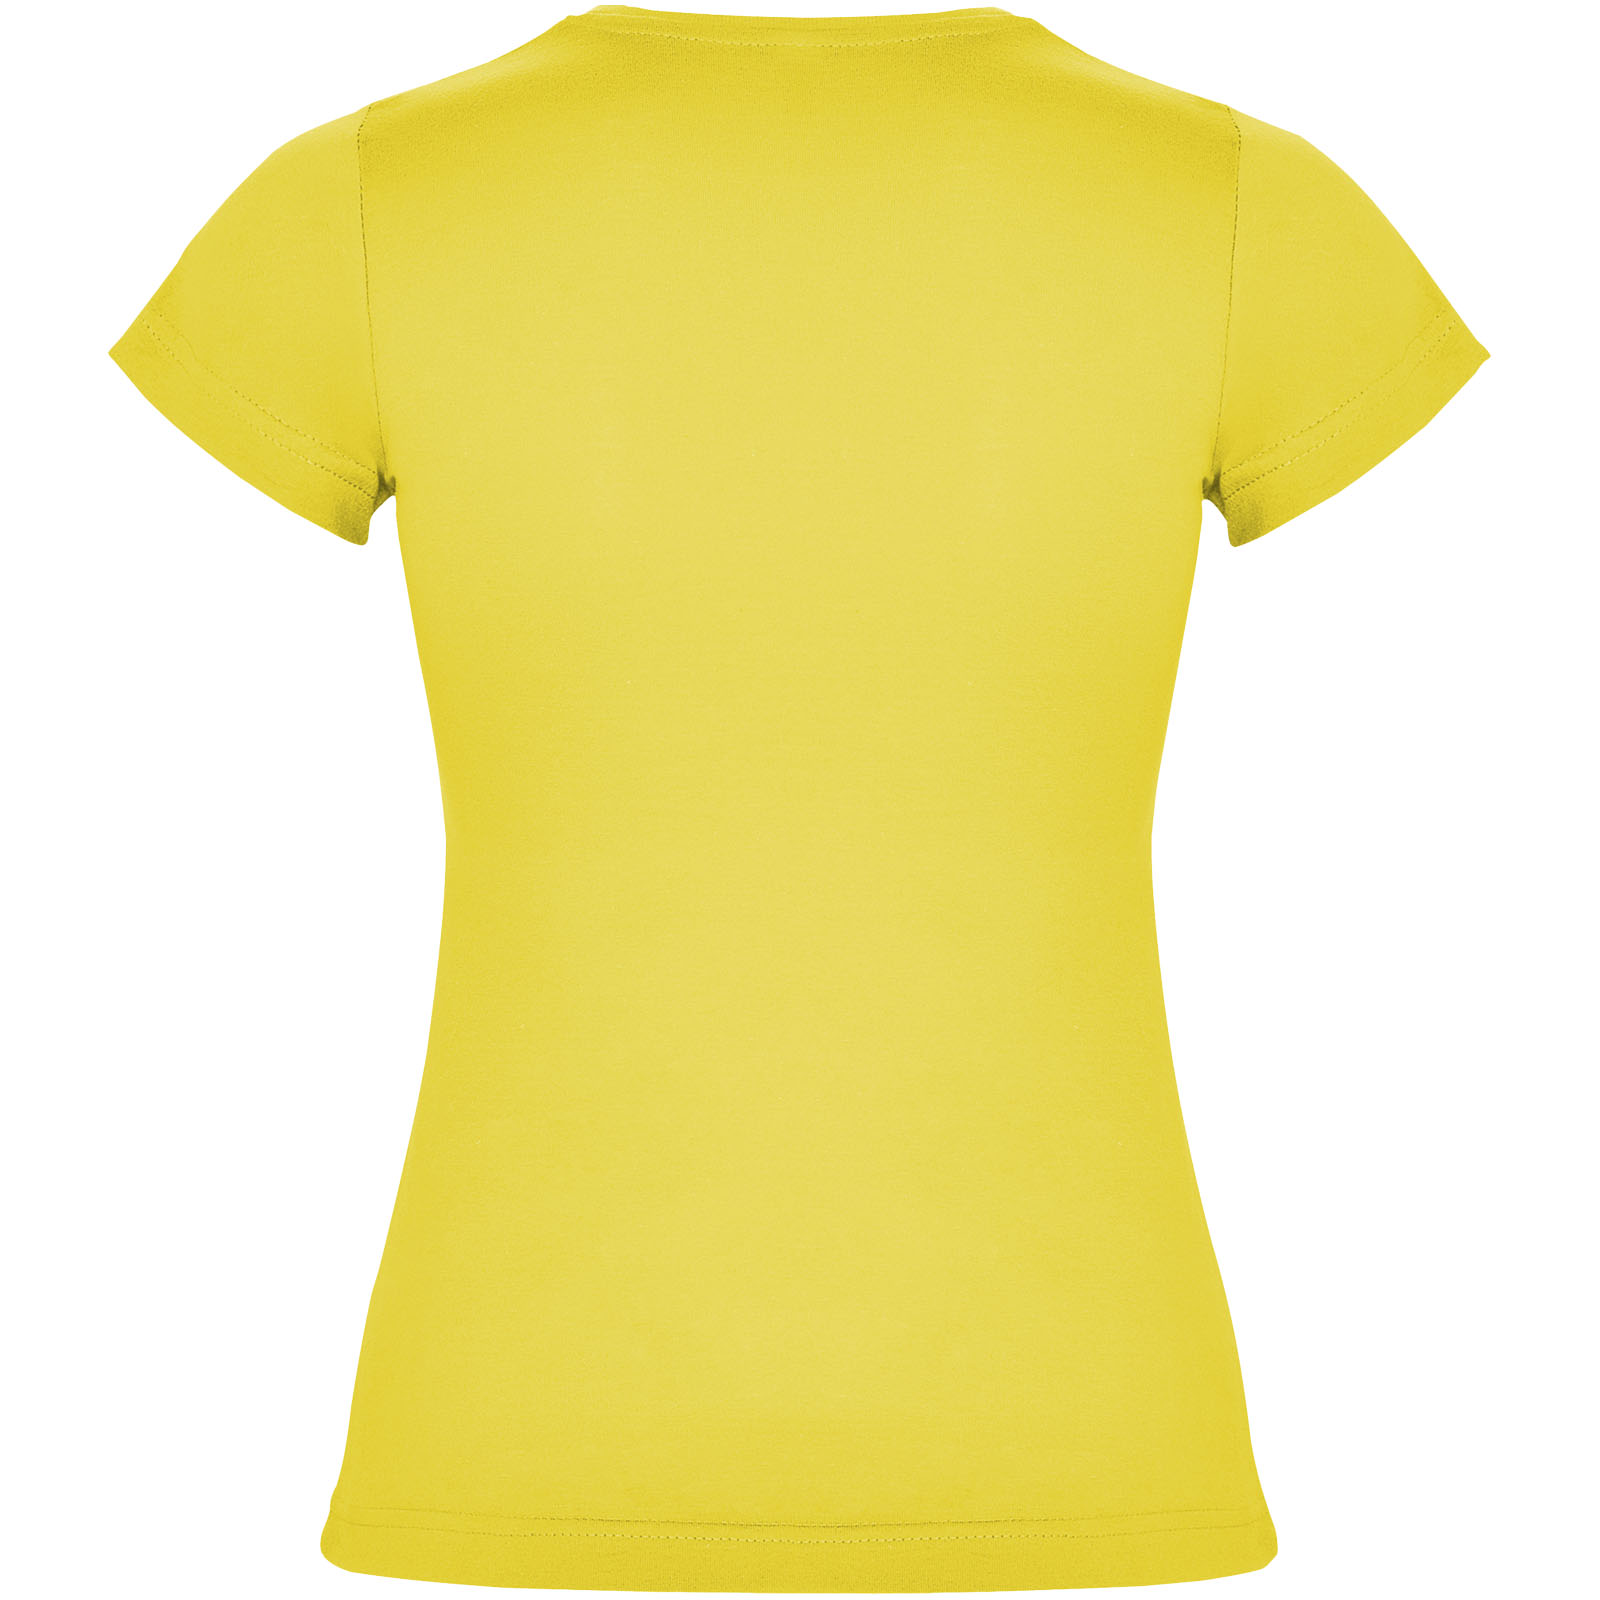 Advertising T-shirts - Jamaica short sleeve women's t-shirt - 1